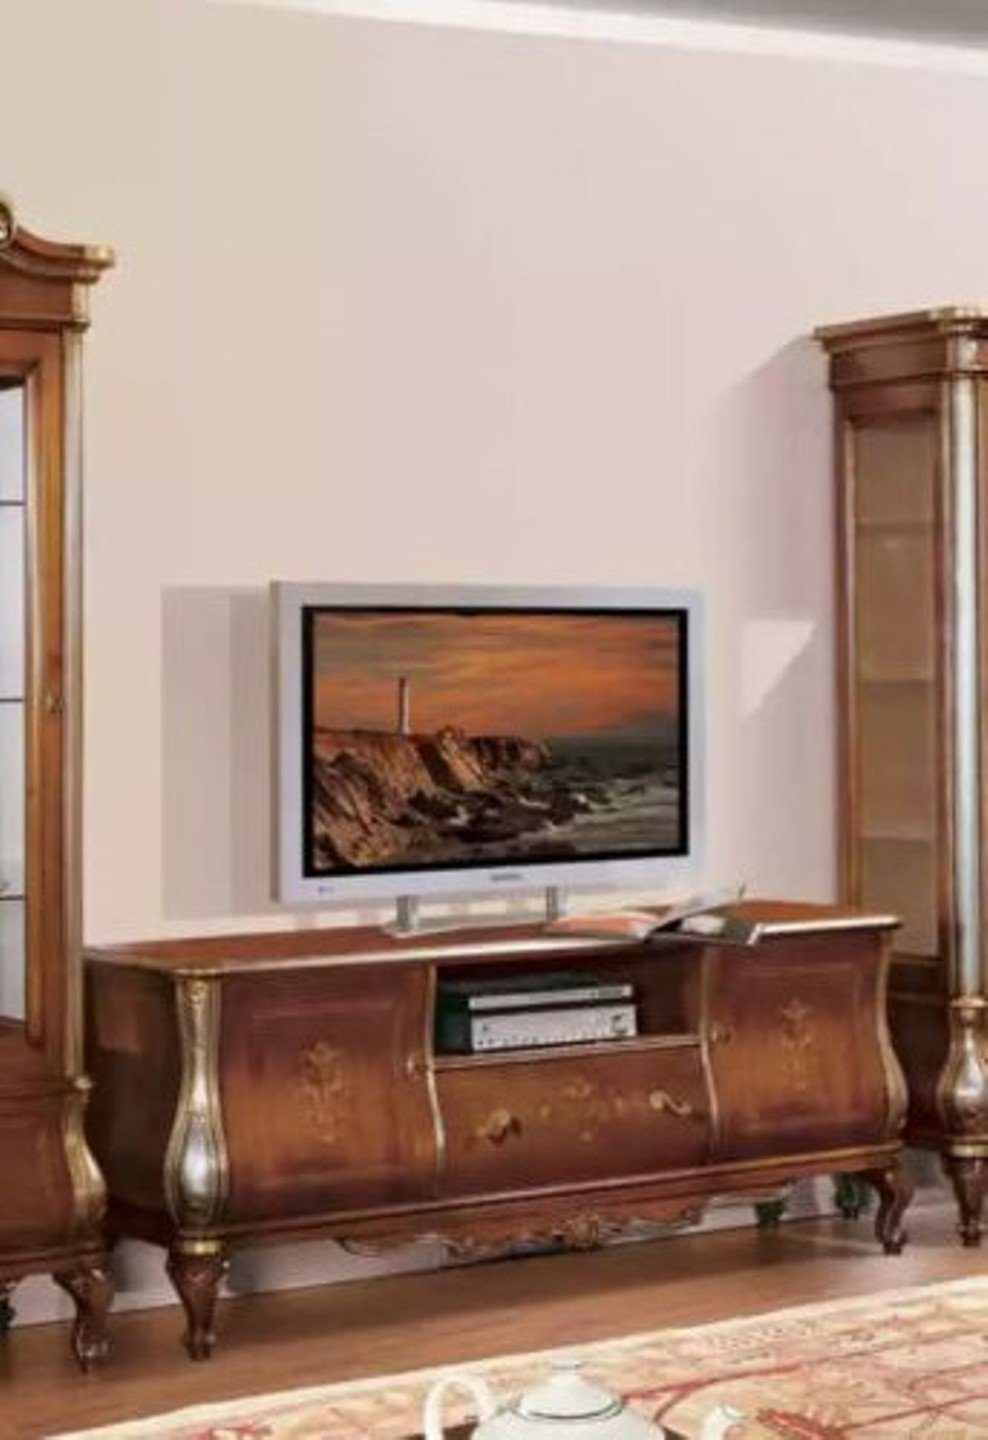 JVmoebel Braunes TV-Regal rtv Sideboard TV-Ständer, TV-Ständer, Wohnzimmer Italy) Holz in Möbel (1-tlg., Made